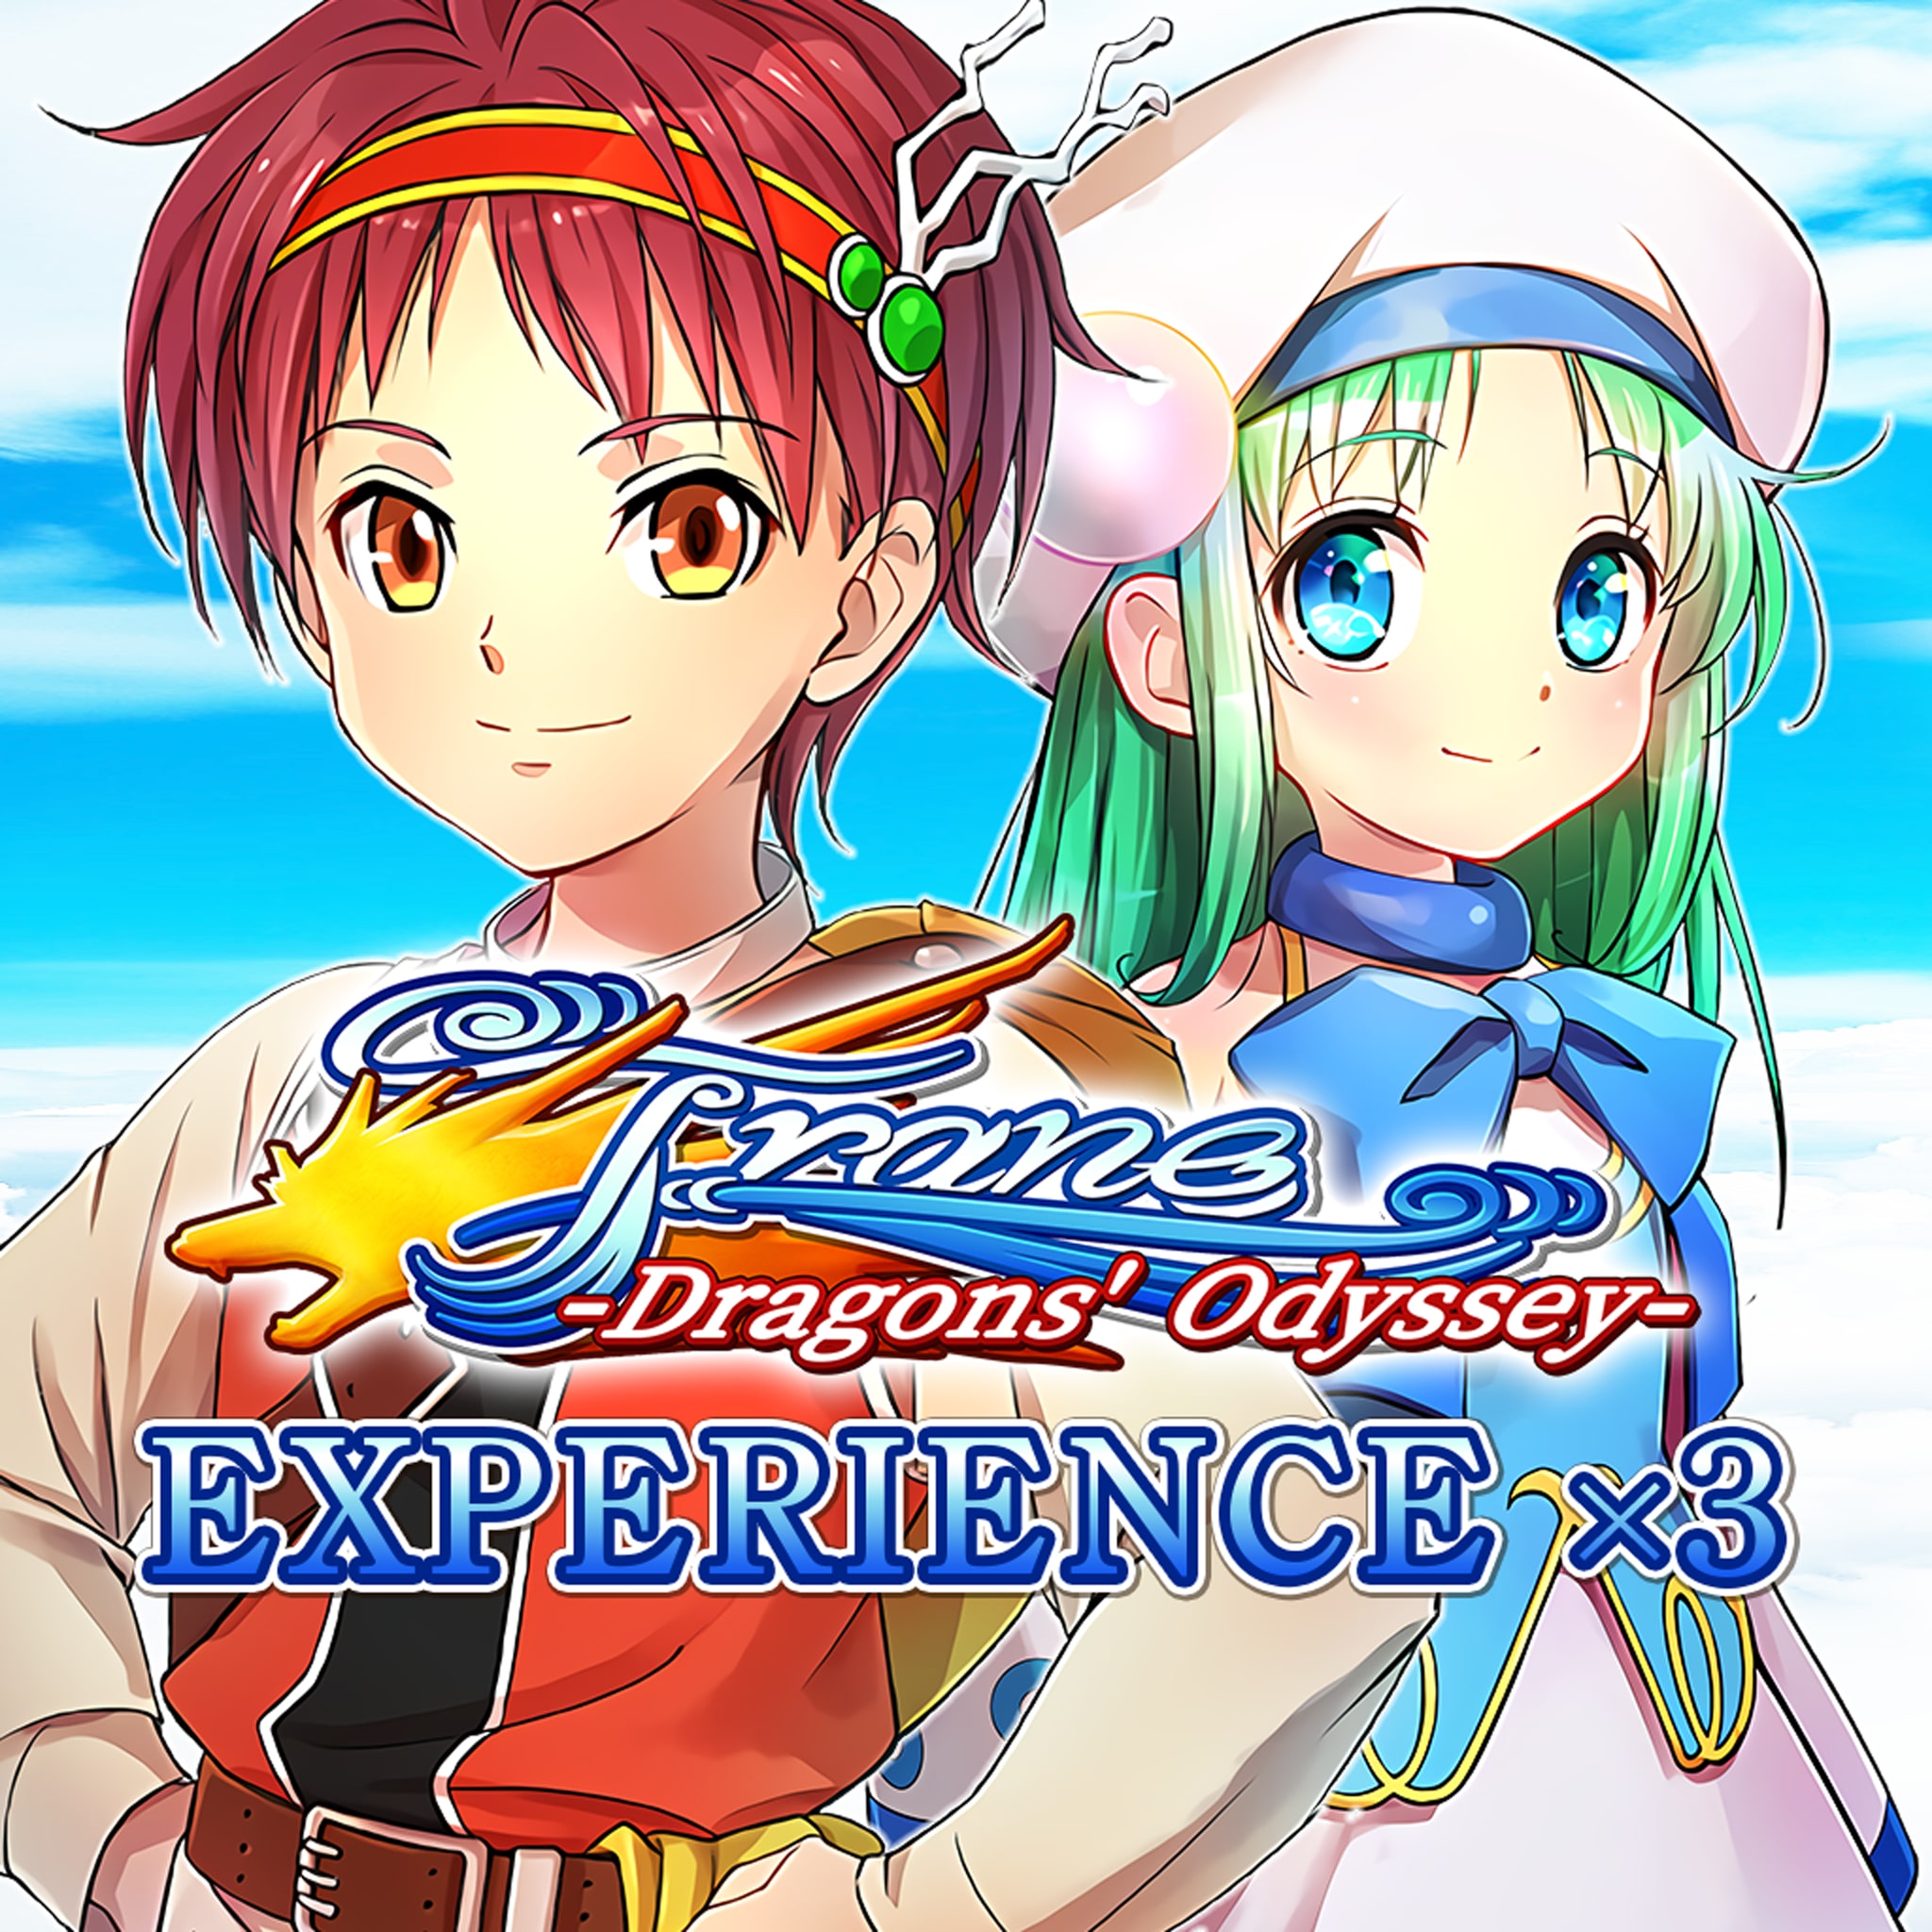 Experience x3 - Frane: Dragons' Odyssey